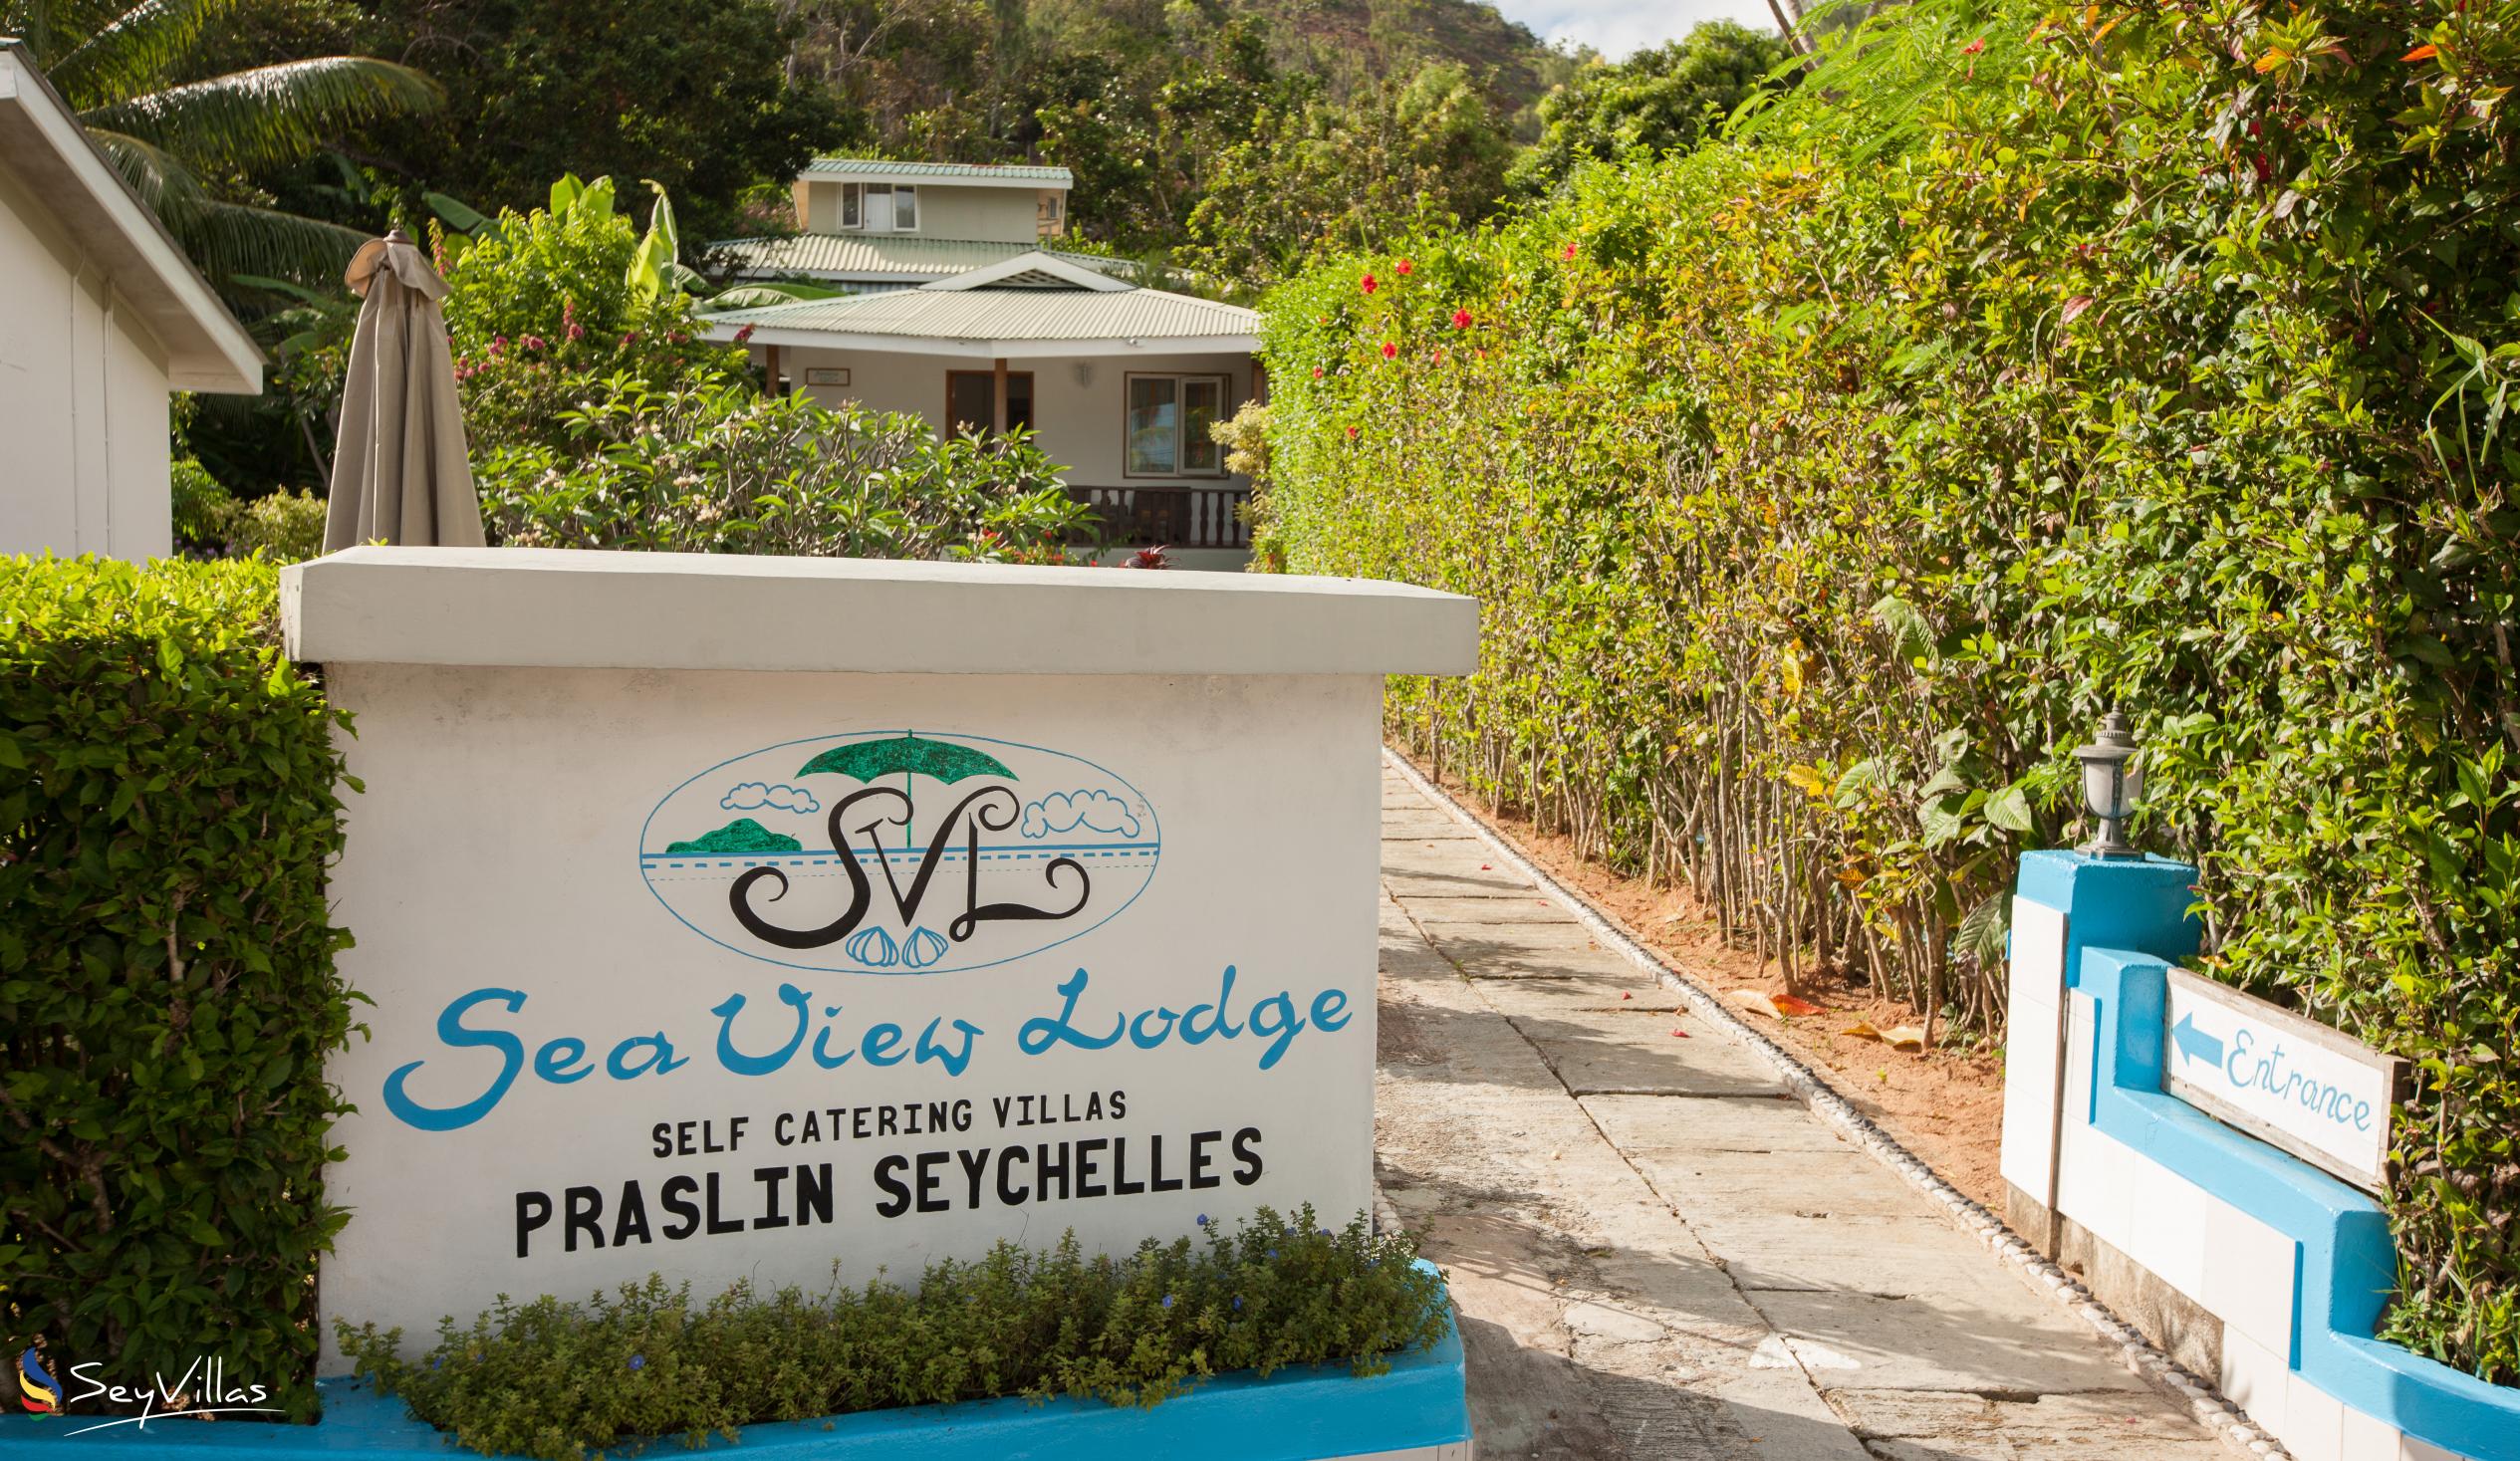 Photo 94: Sea View Lodge - Outdoor area - Praslin (Seychelles)